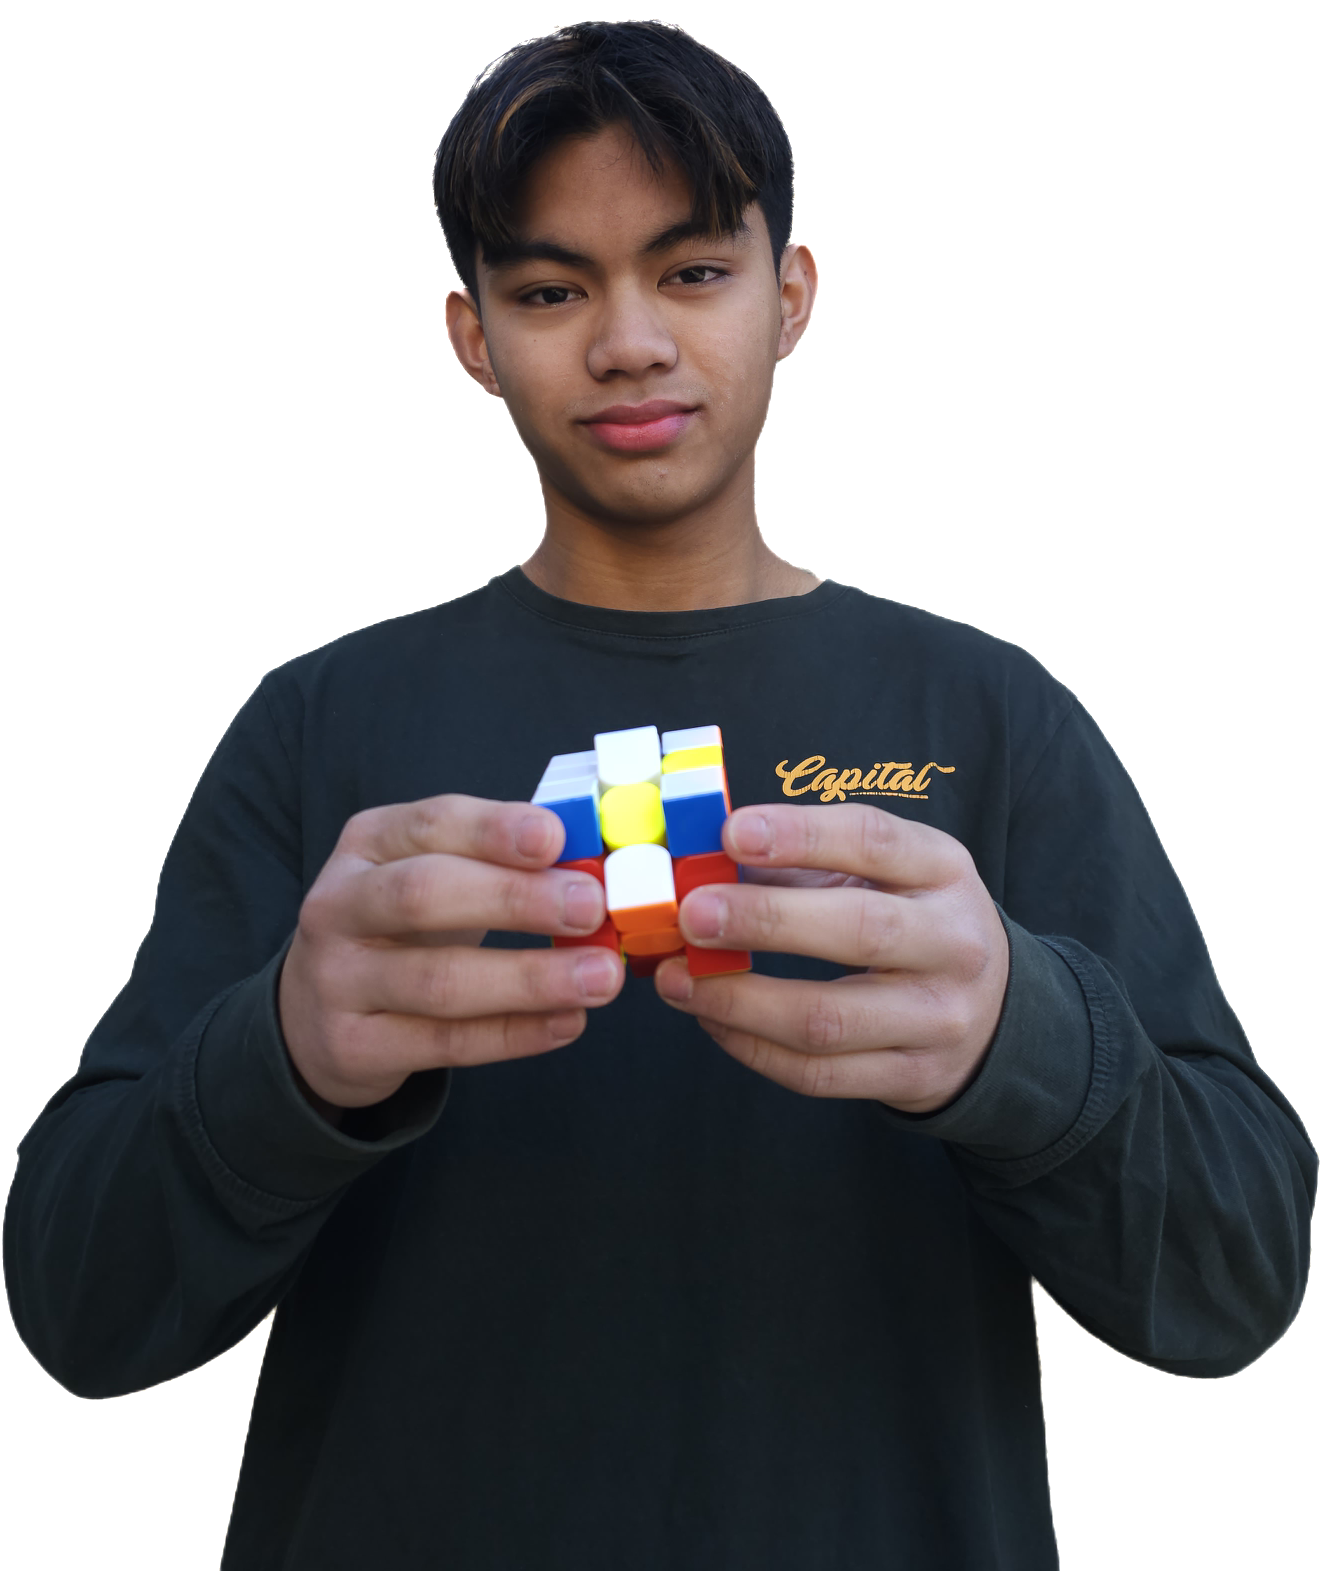 Rubik's WCA Oceanic Championship